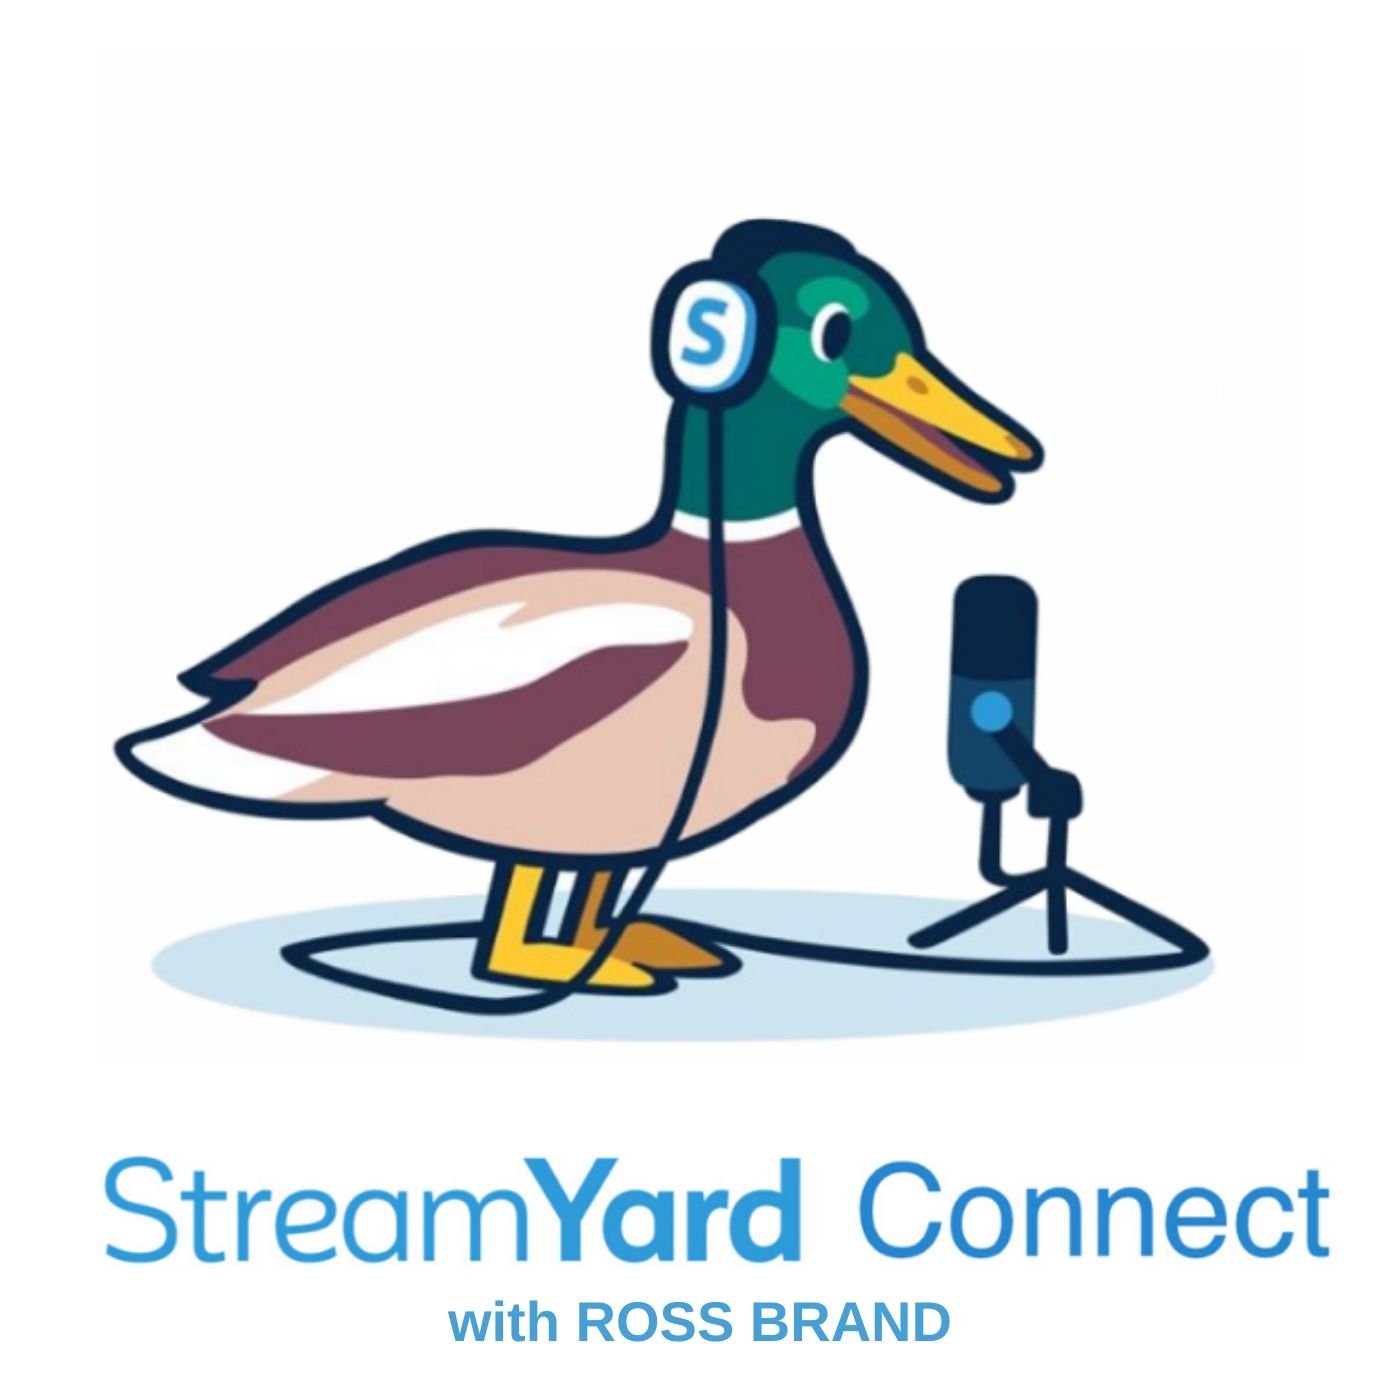 StreamYard Connect